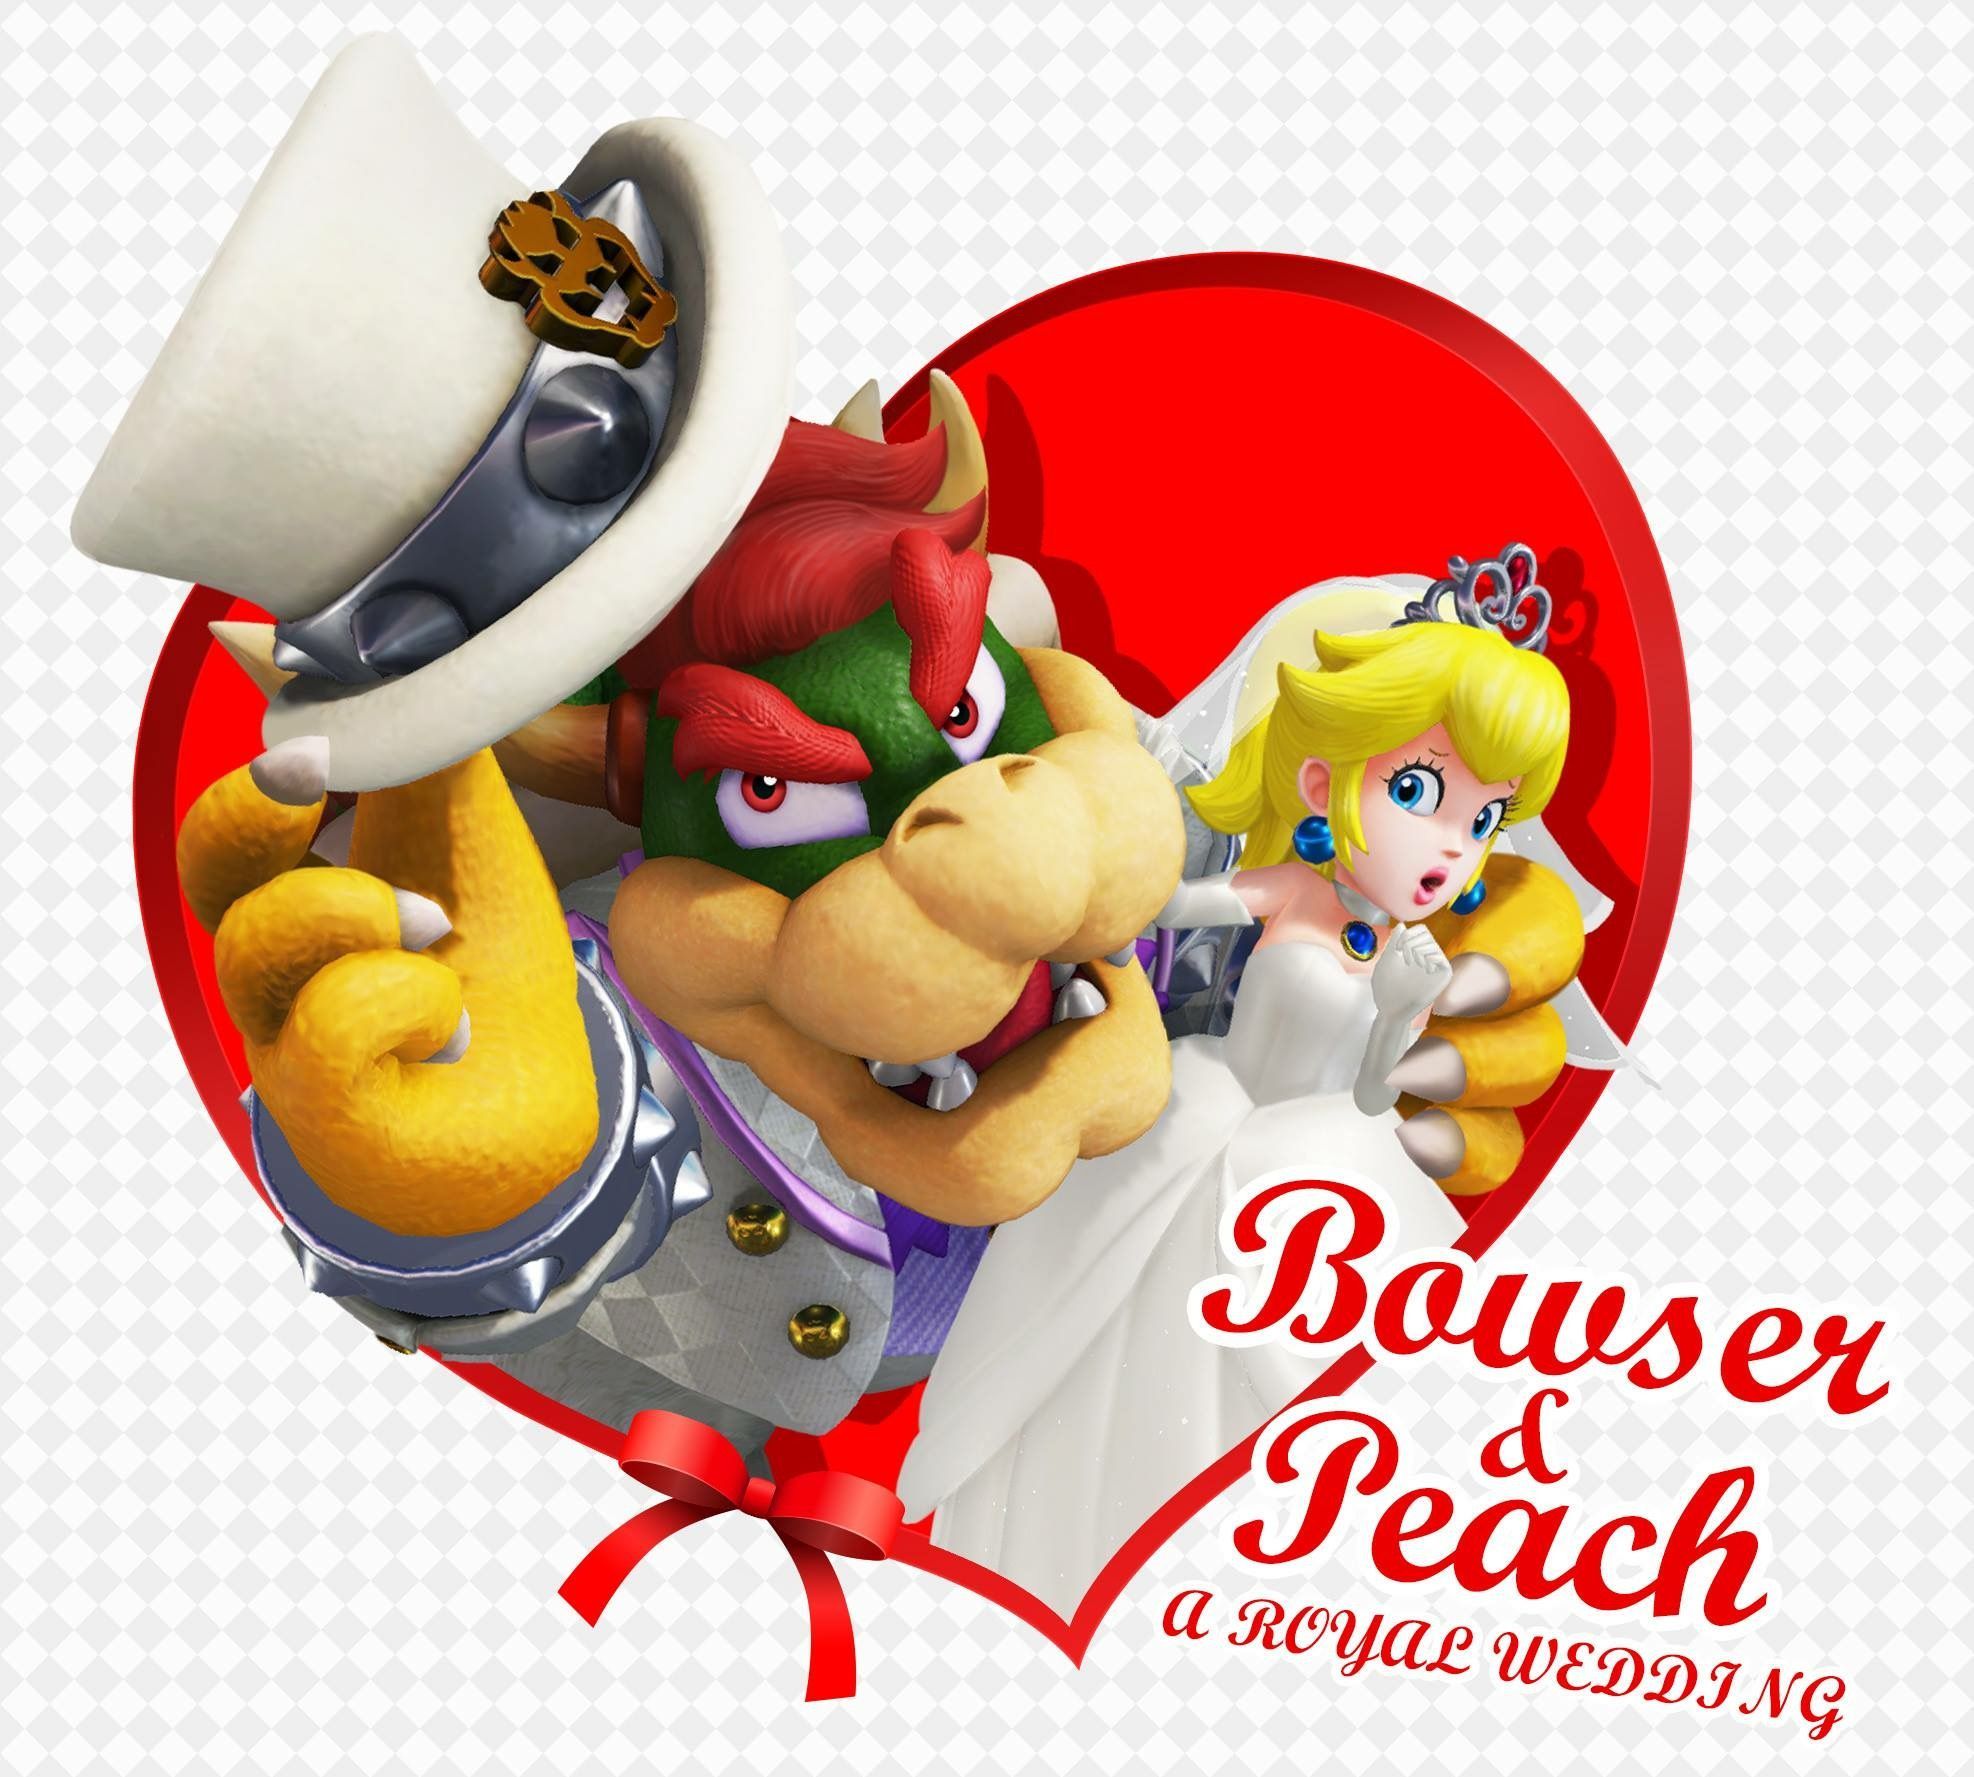 Bowser and Peach's Royal Wedding Super Mario Oddessyor something